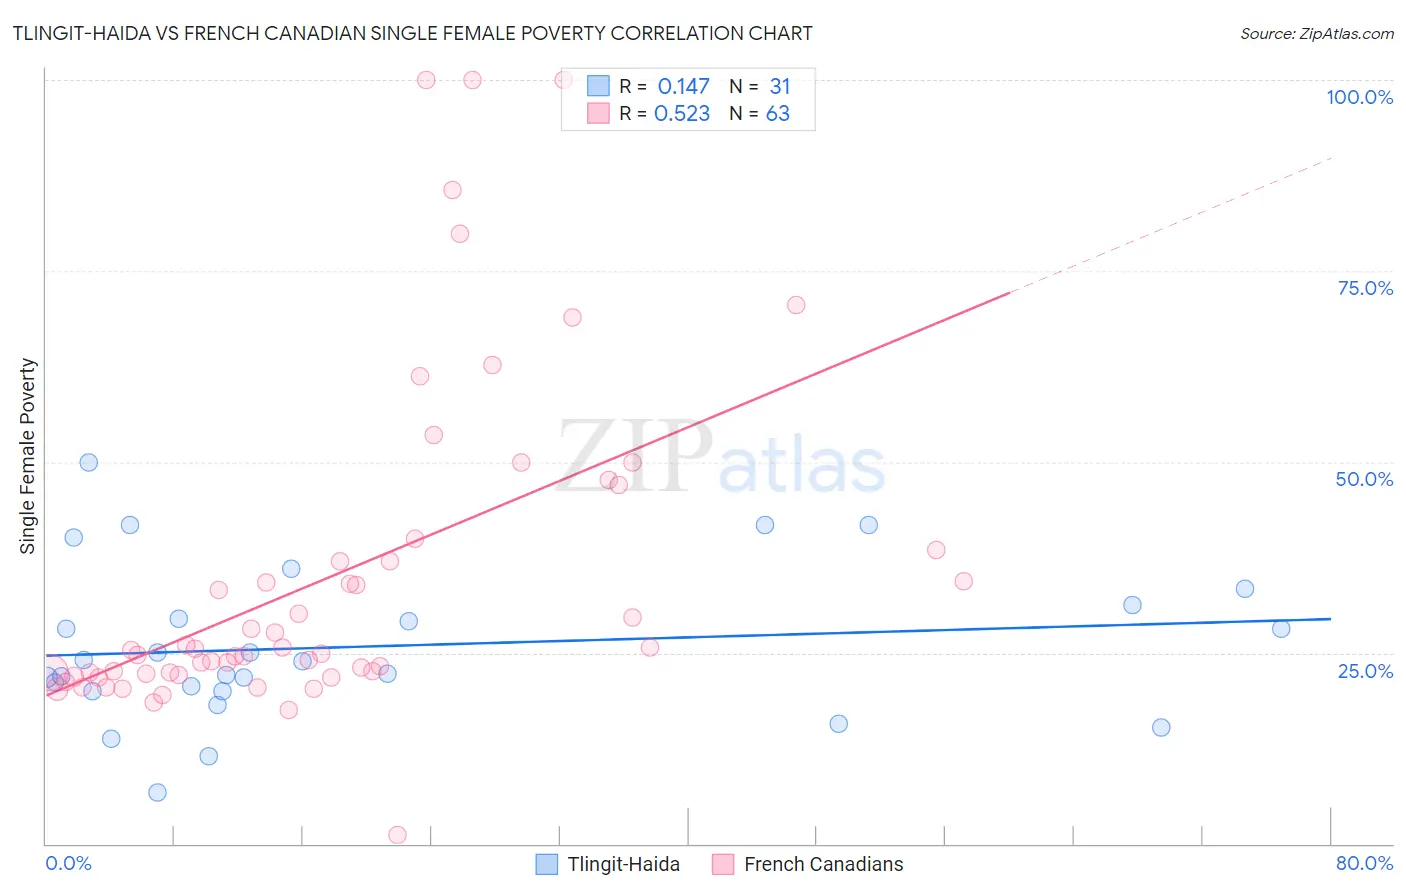 Tlingit-Haida vs French Canadian Single Female Poverty